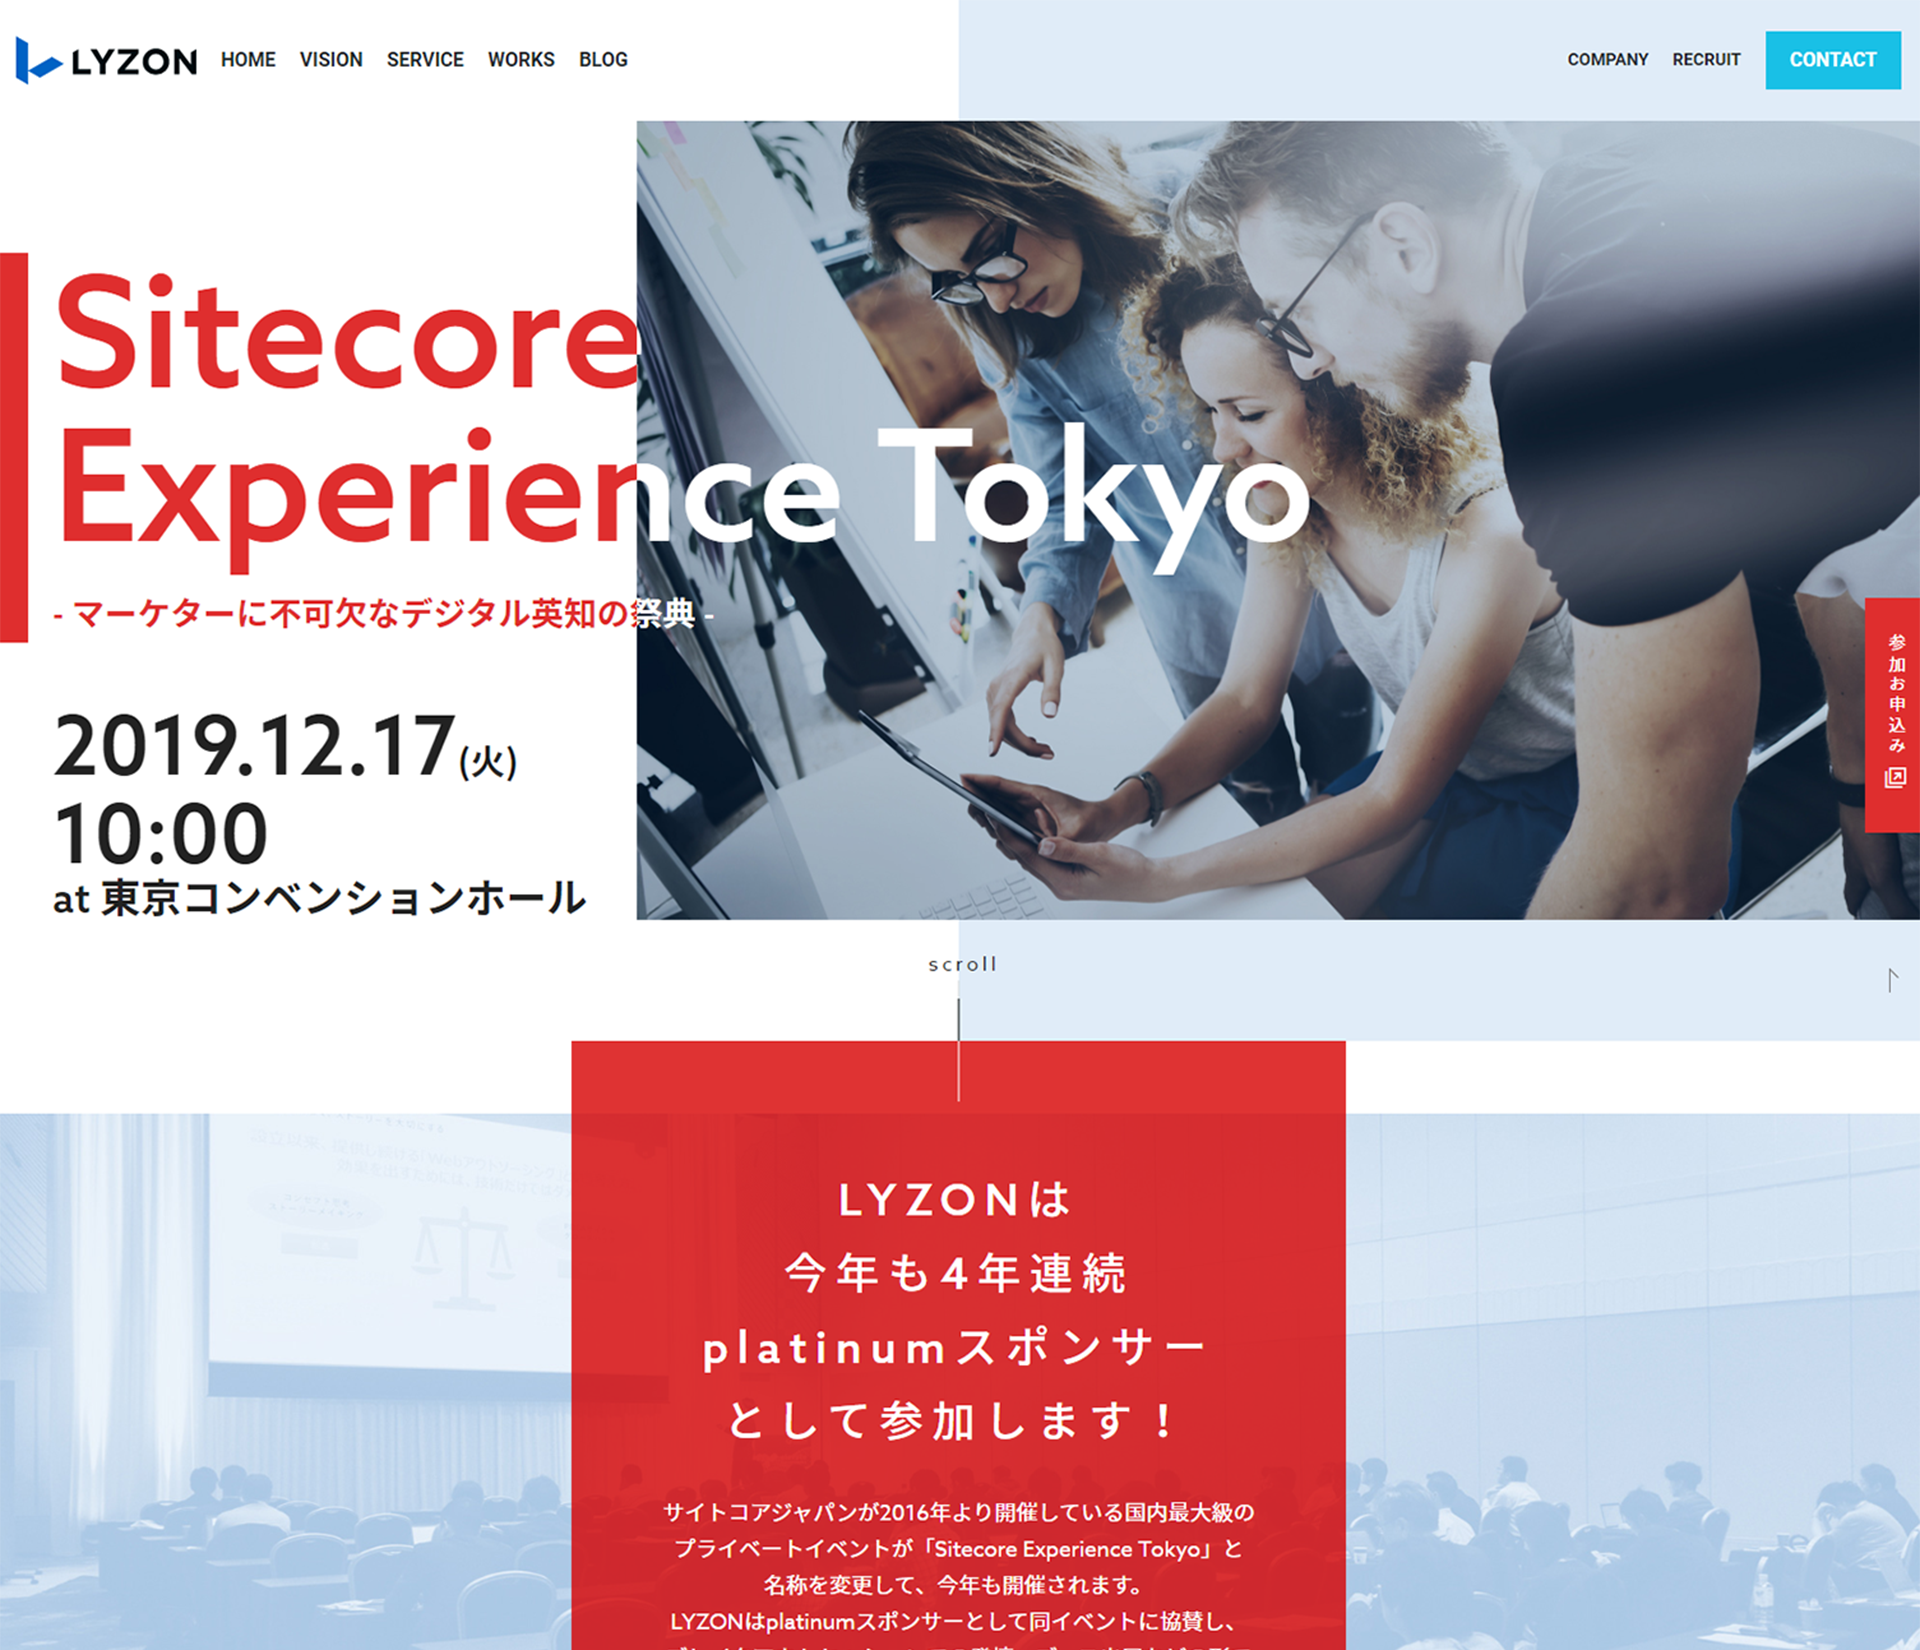 Sitecore Experience Tokyo 2019